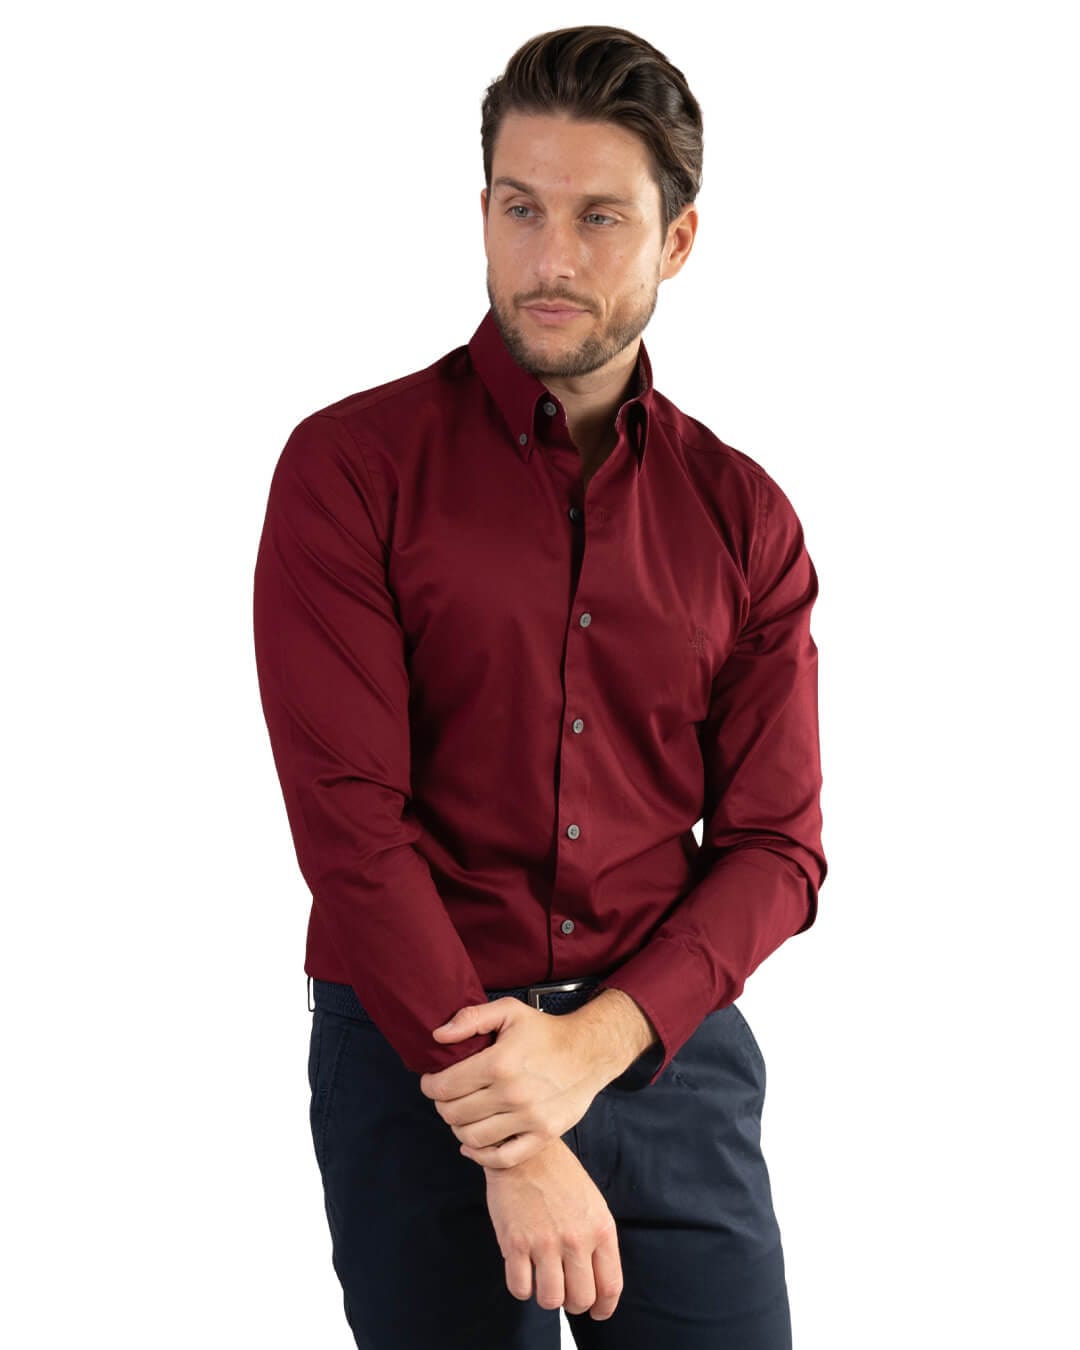 Gagliardi Shirts Gagliardi Bordeaux Cotton Twill Button-Down Shirt